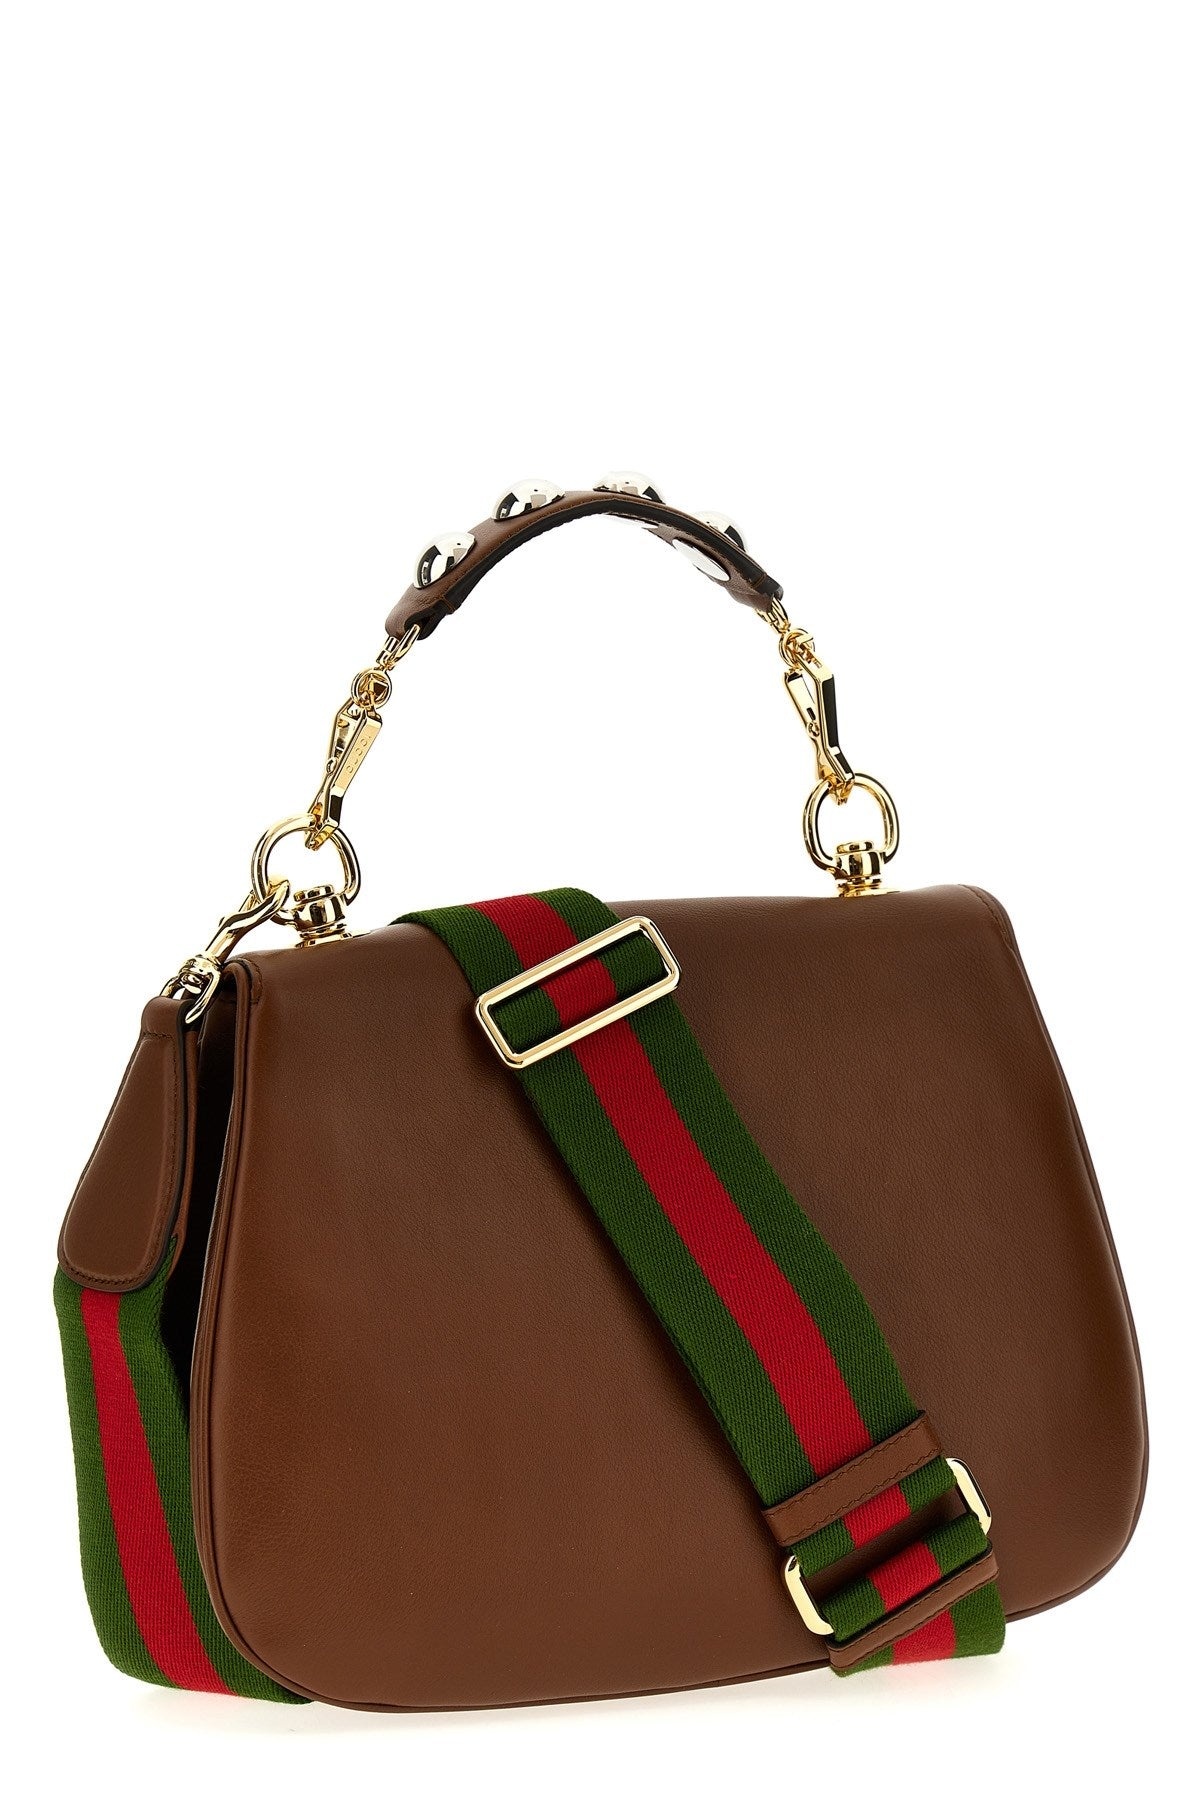 Gucci Women 'Blondie' Small Handbag - 3